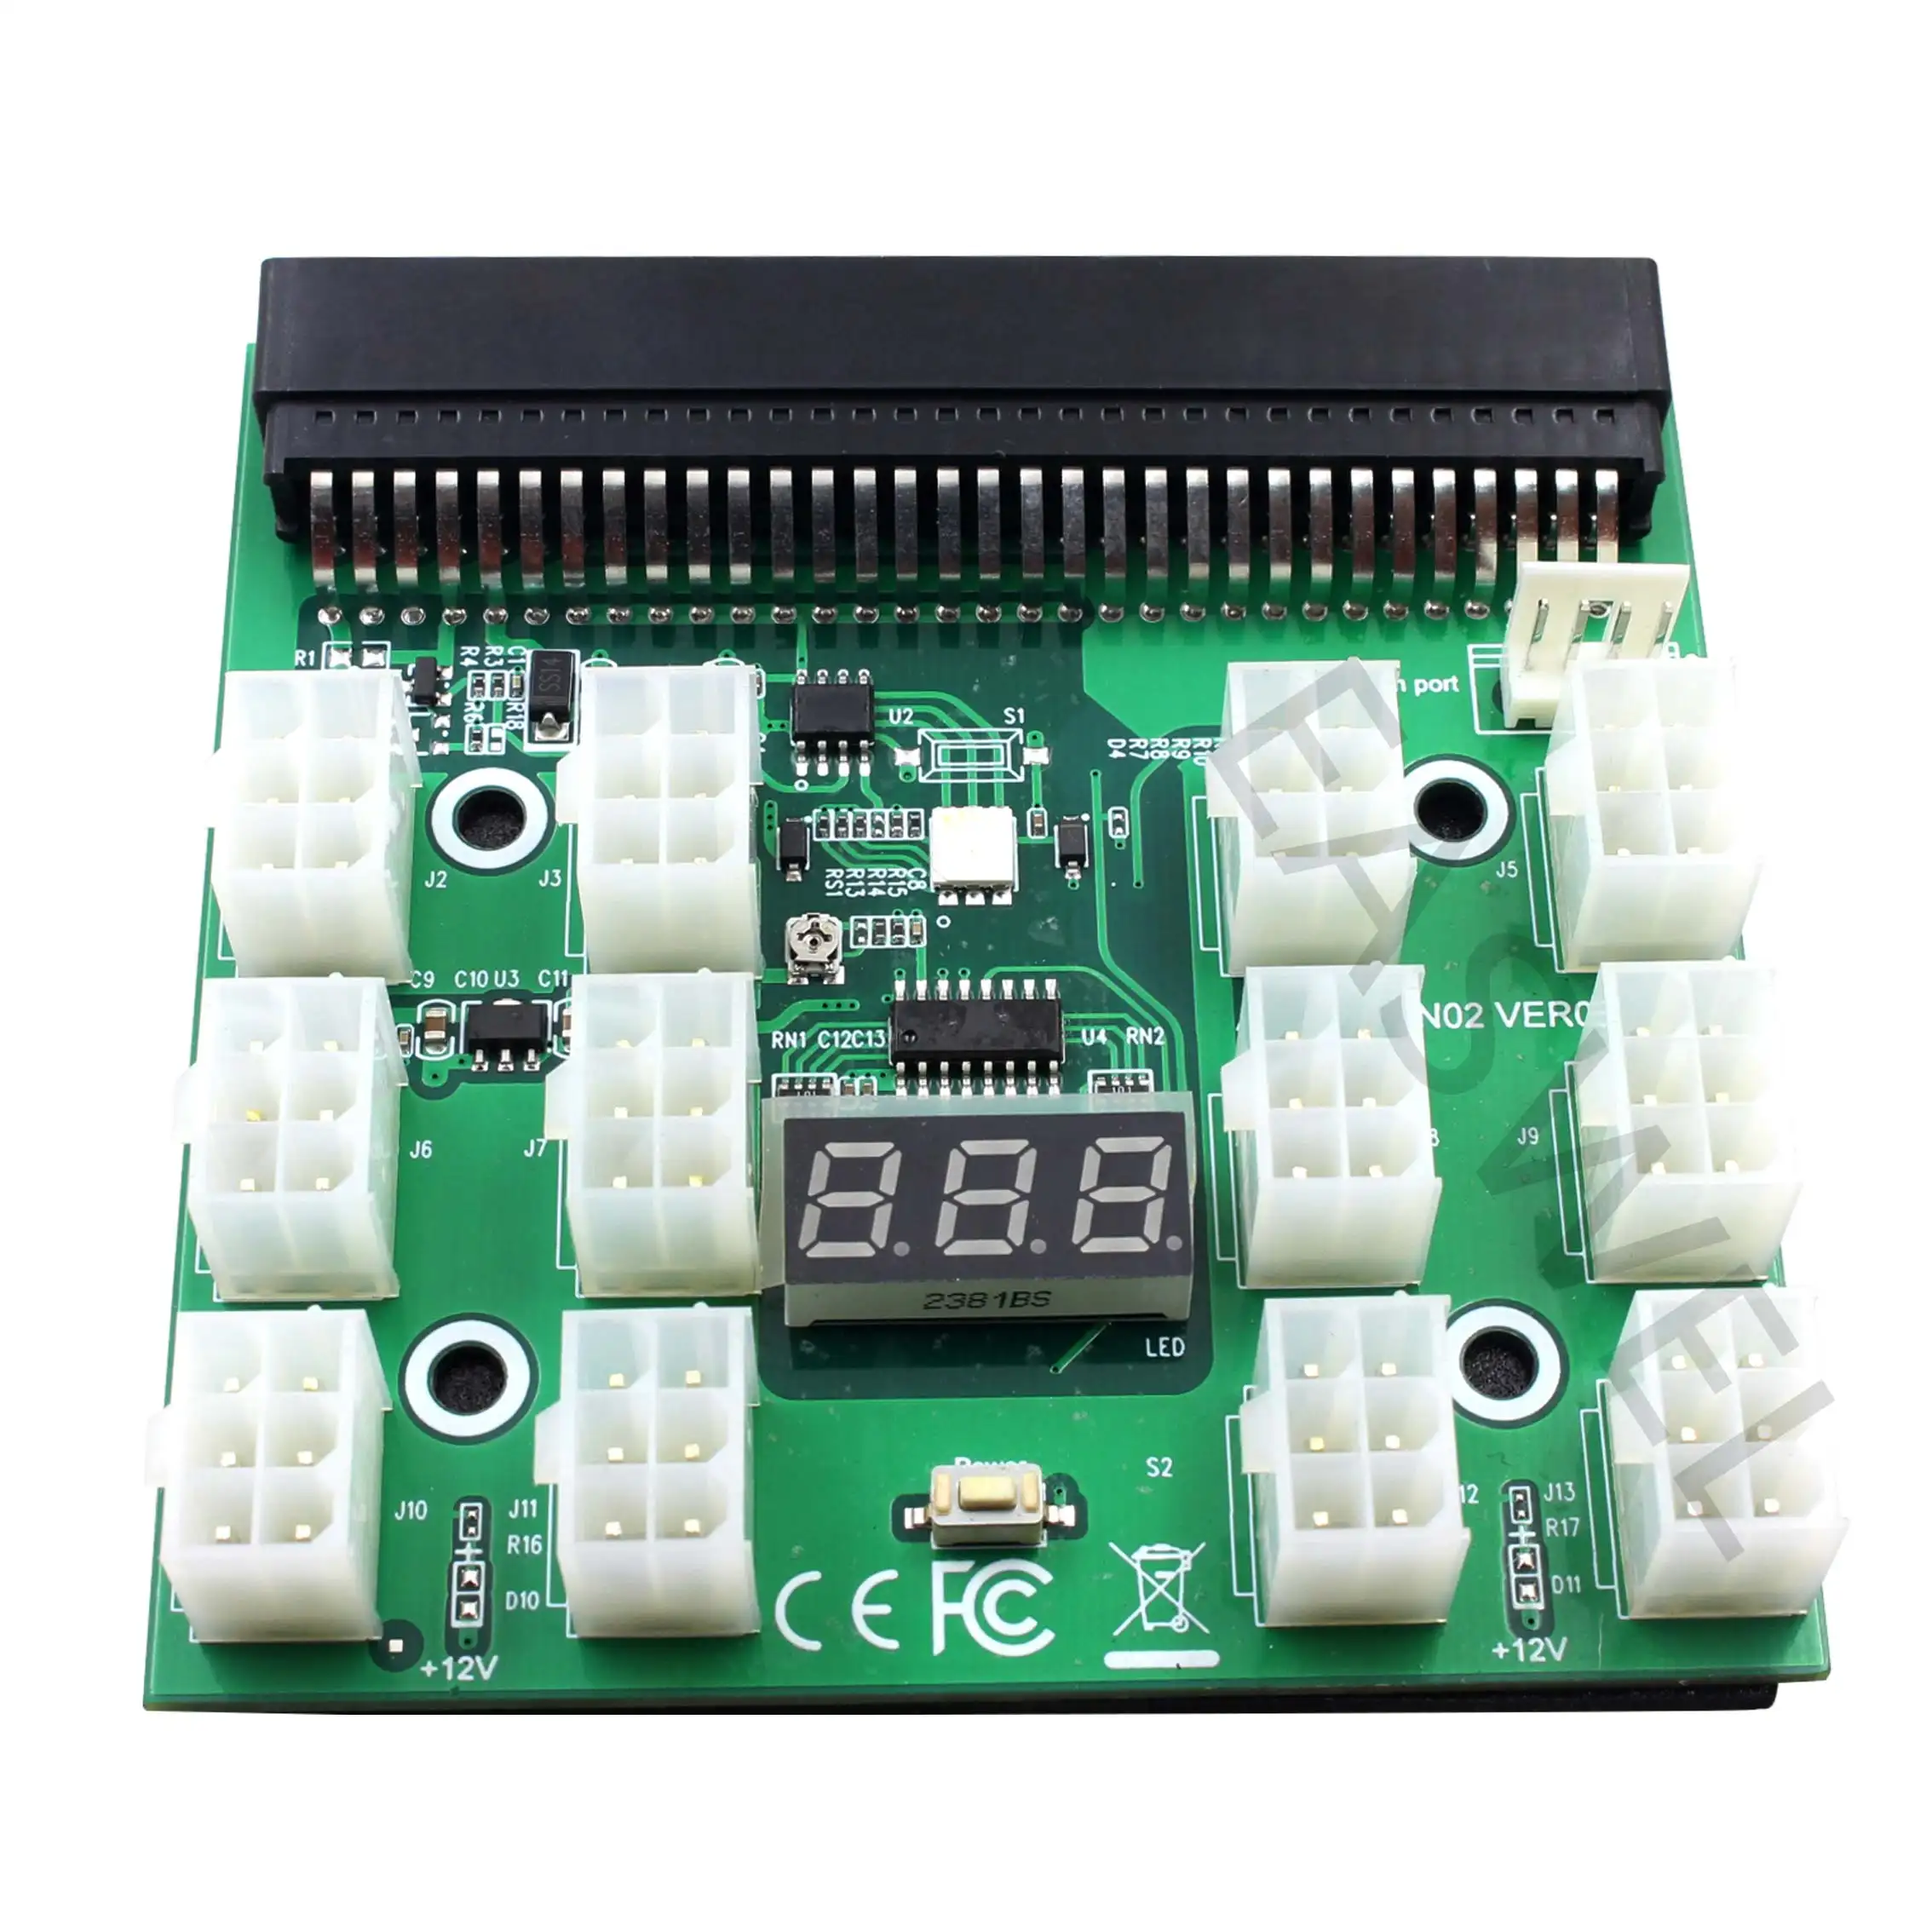 New PCI-E 12V Breakout Board Adapter cho 750W/1200W/1500W máy chủ cung cấp điện